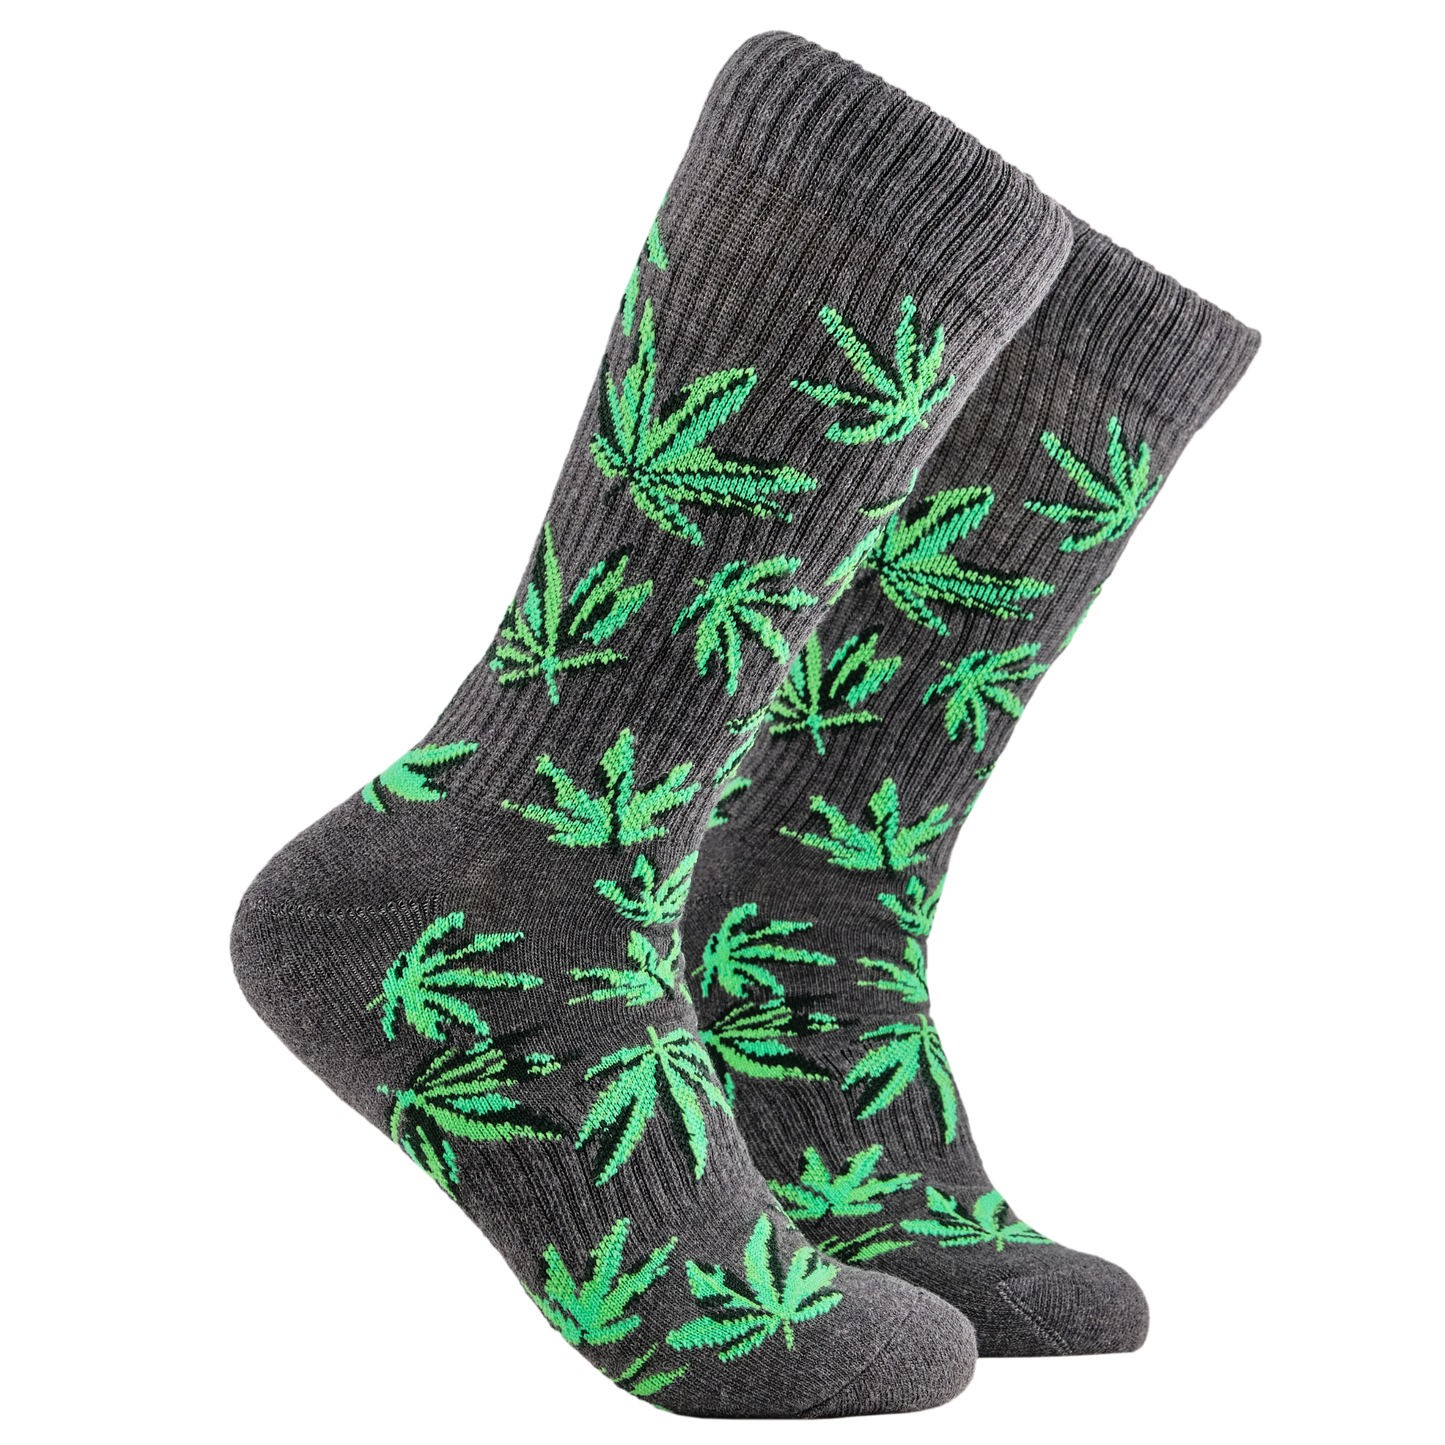 Weed Socks - High Life Athletic. A pair of socks depicting cannabis leaves. Grey athletic legs, grey cuff, heel and toe.